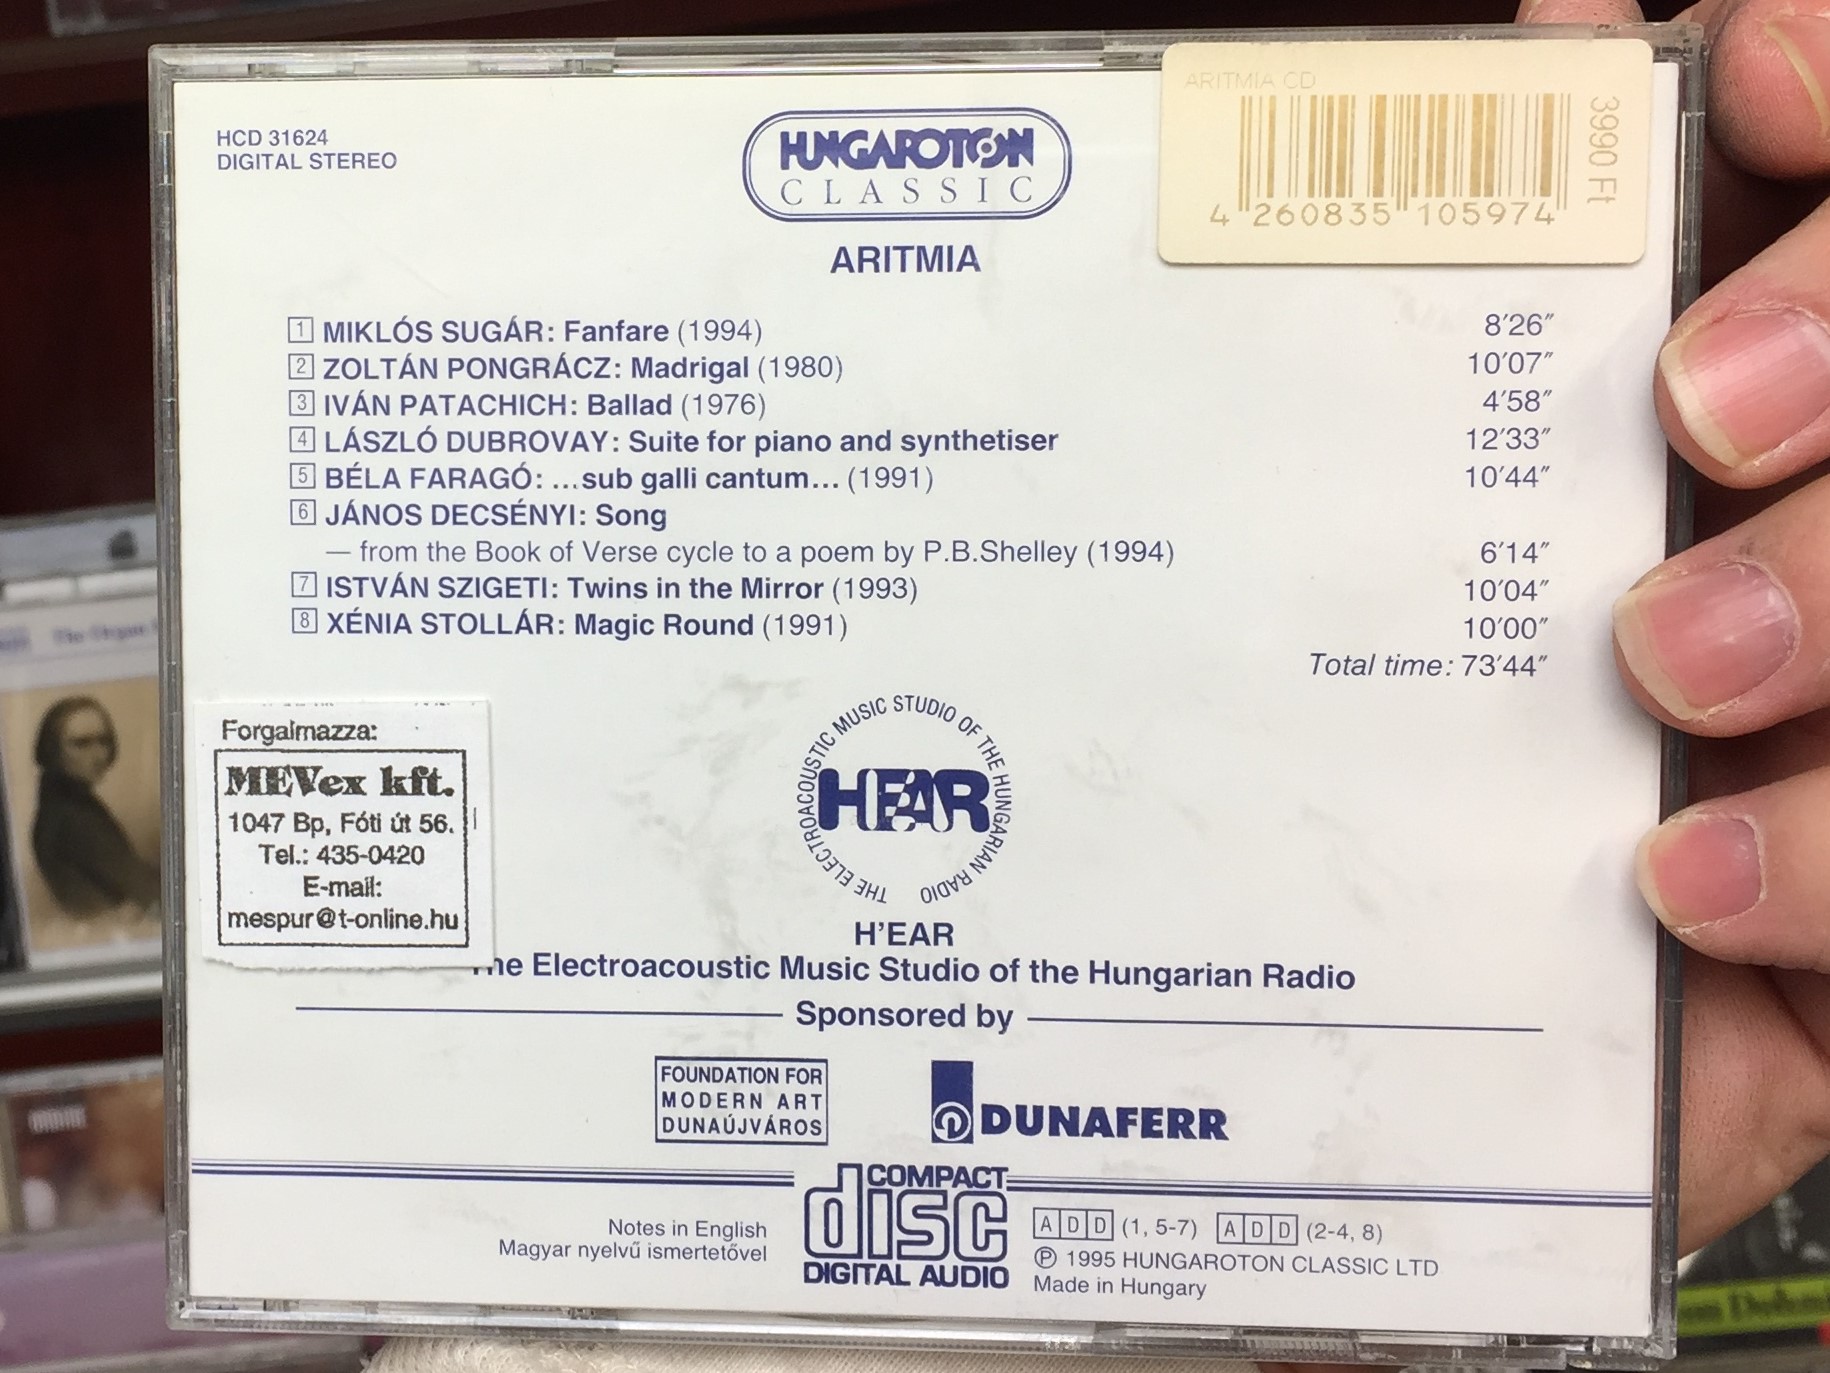 aritmia-works-by-miklos-sugar-zoltan-pongracz-ivan-patachich-laszlo-dubrovay-bela-farago-janos-decsenyi-istvan-szigeti-xenia-stollar-hungaroton-classic-audio-cd-1995-stereo-hcd-31624-.jpg